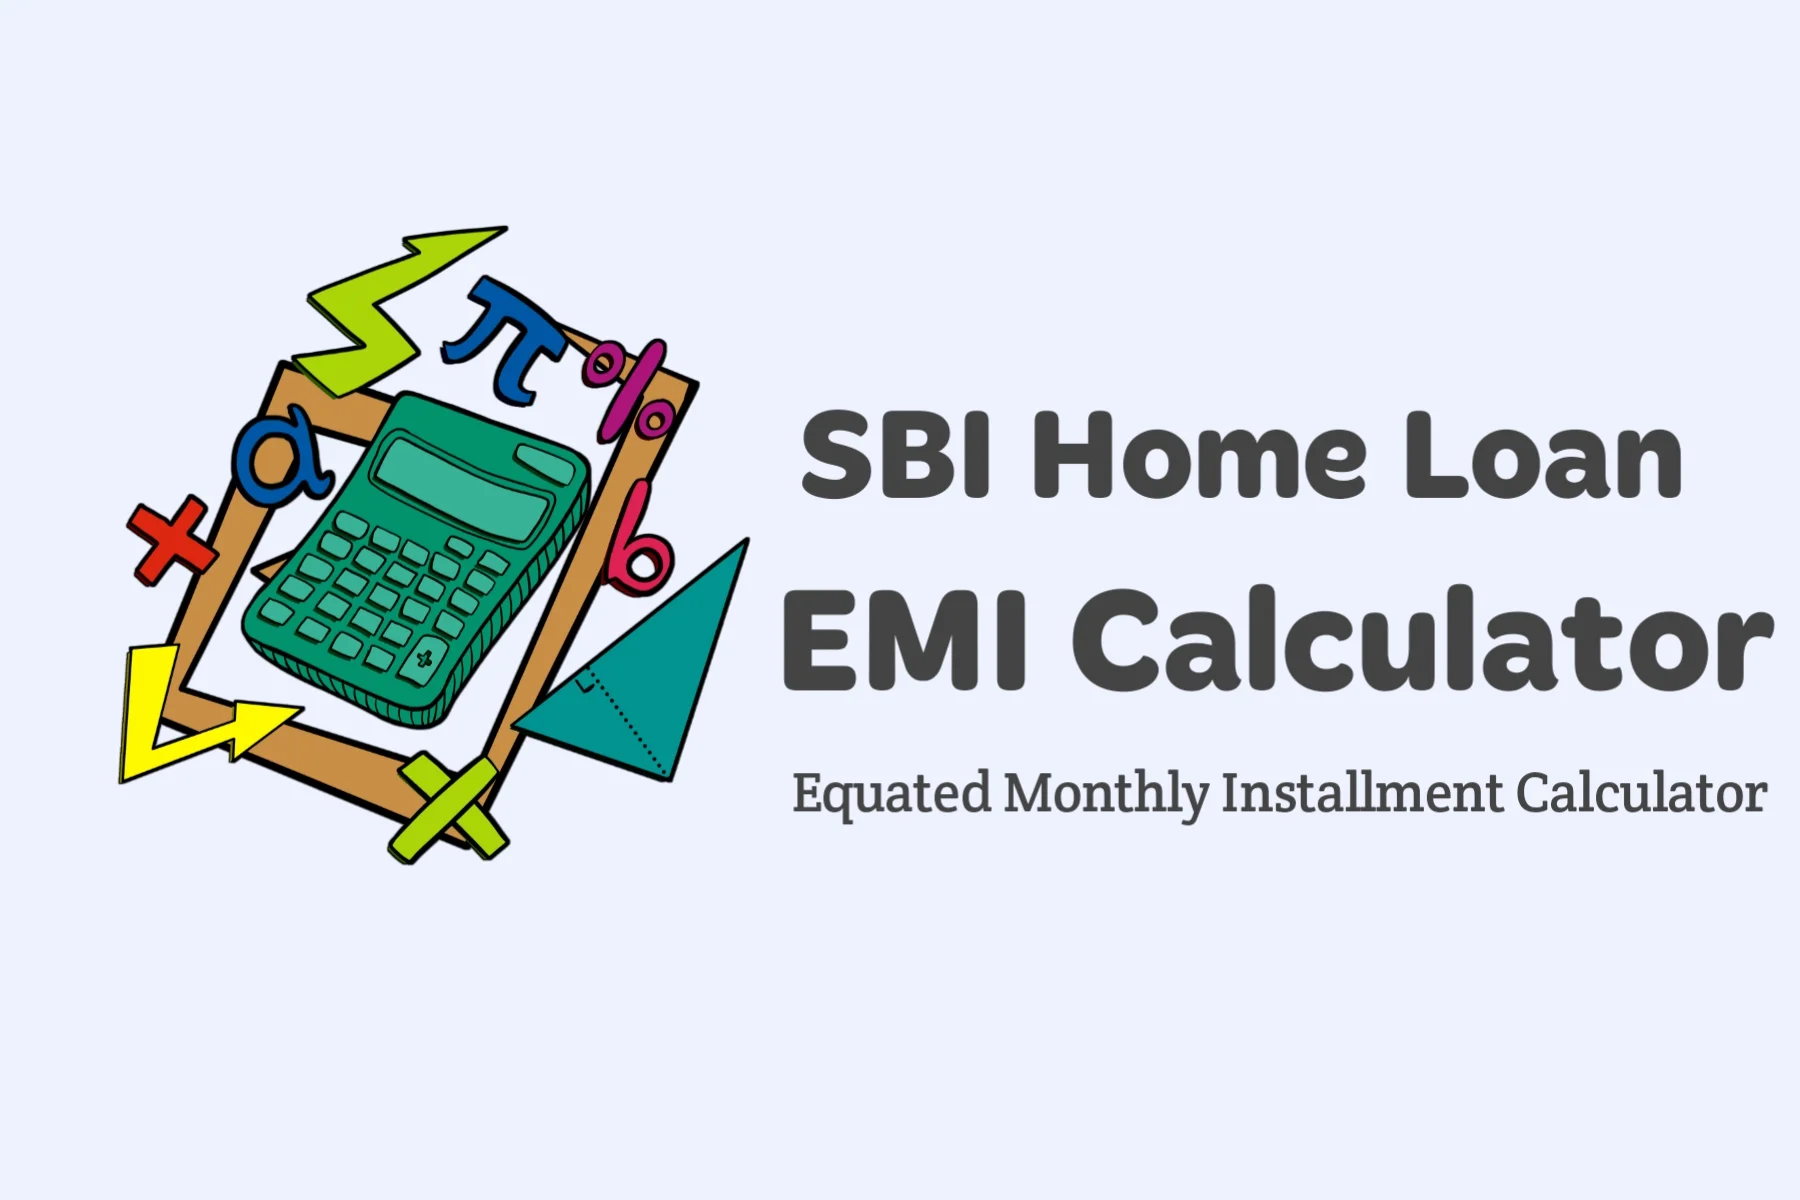 SBI Home Loan EMI Calculator